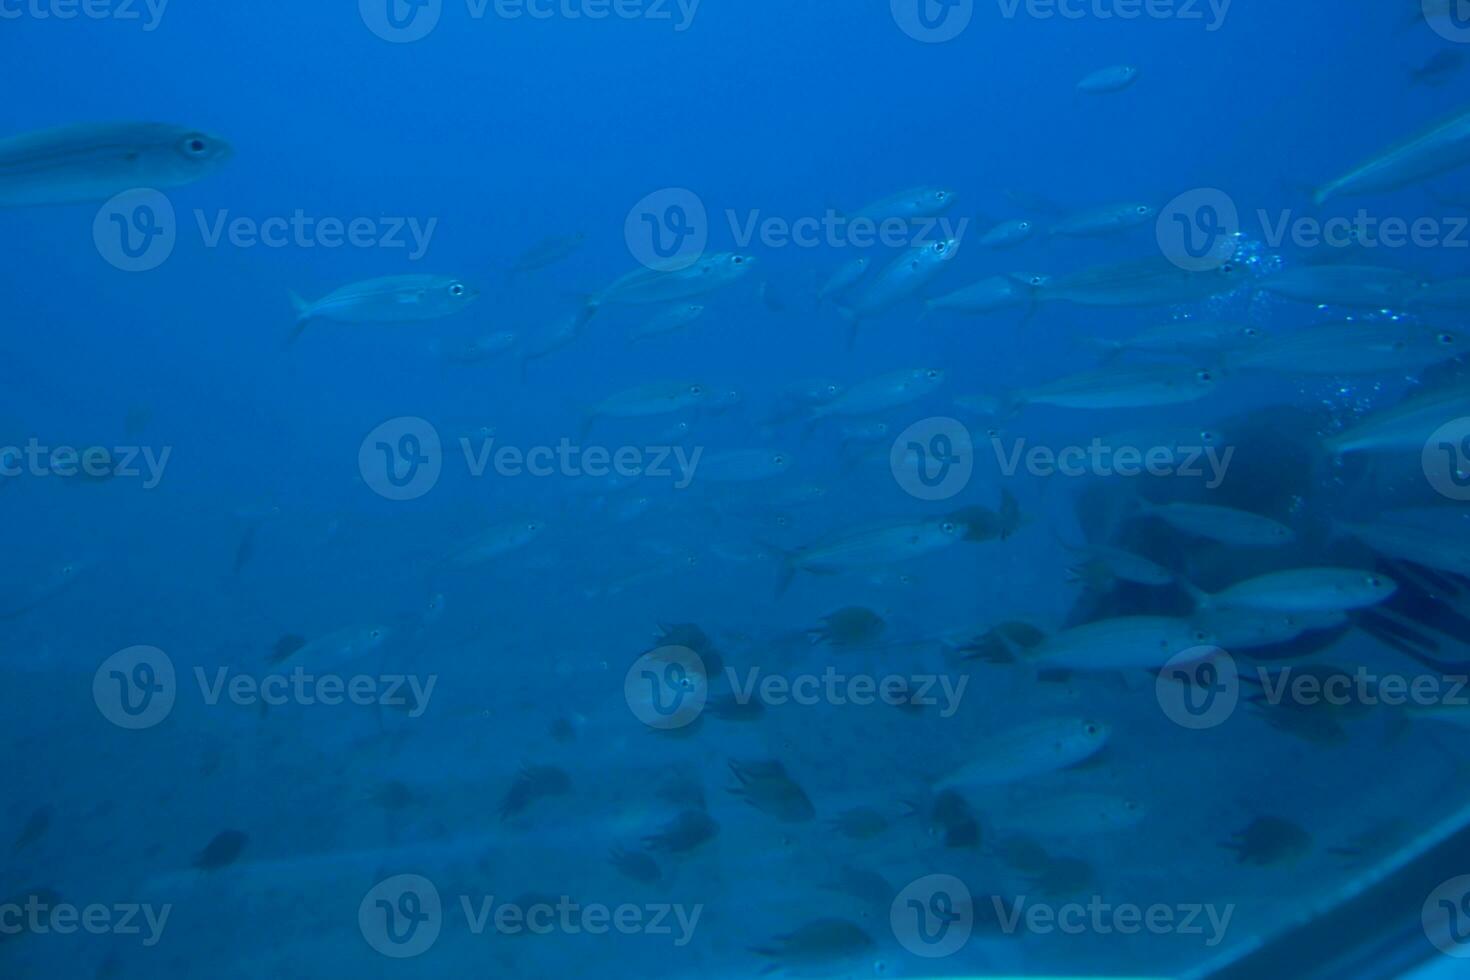 silencieux calme sous-marin monde avec poisson vivant dans le atlantique océan photo